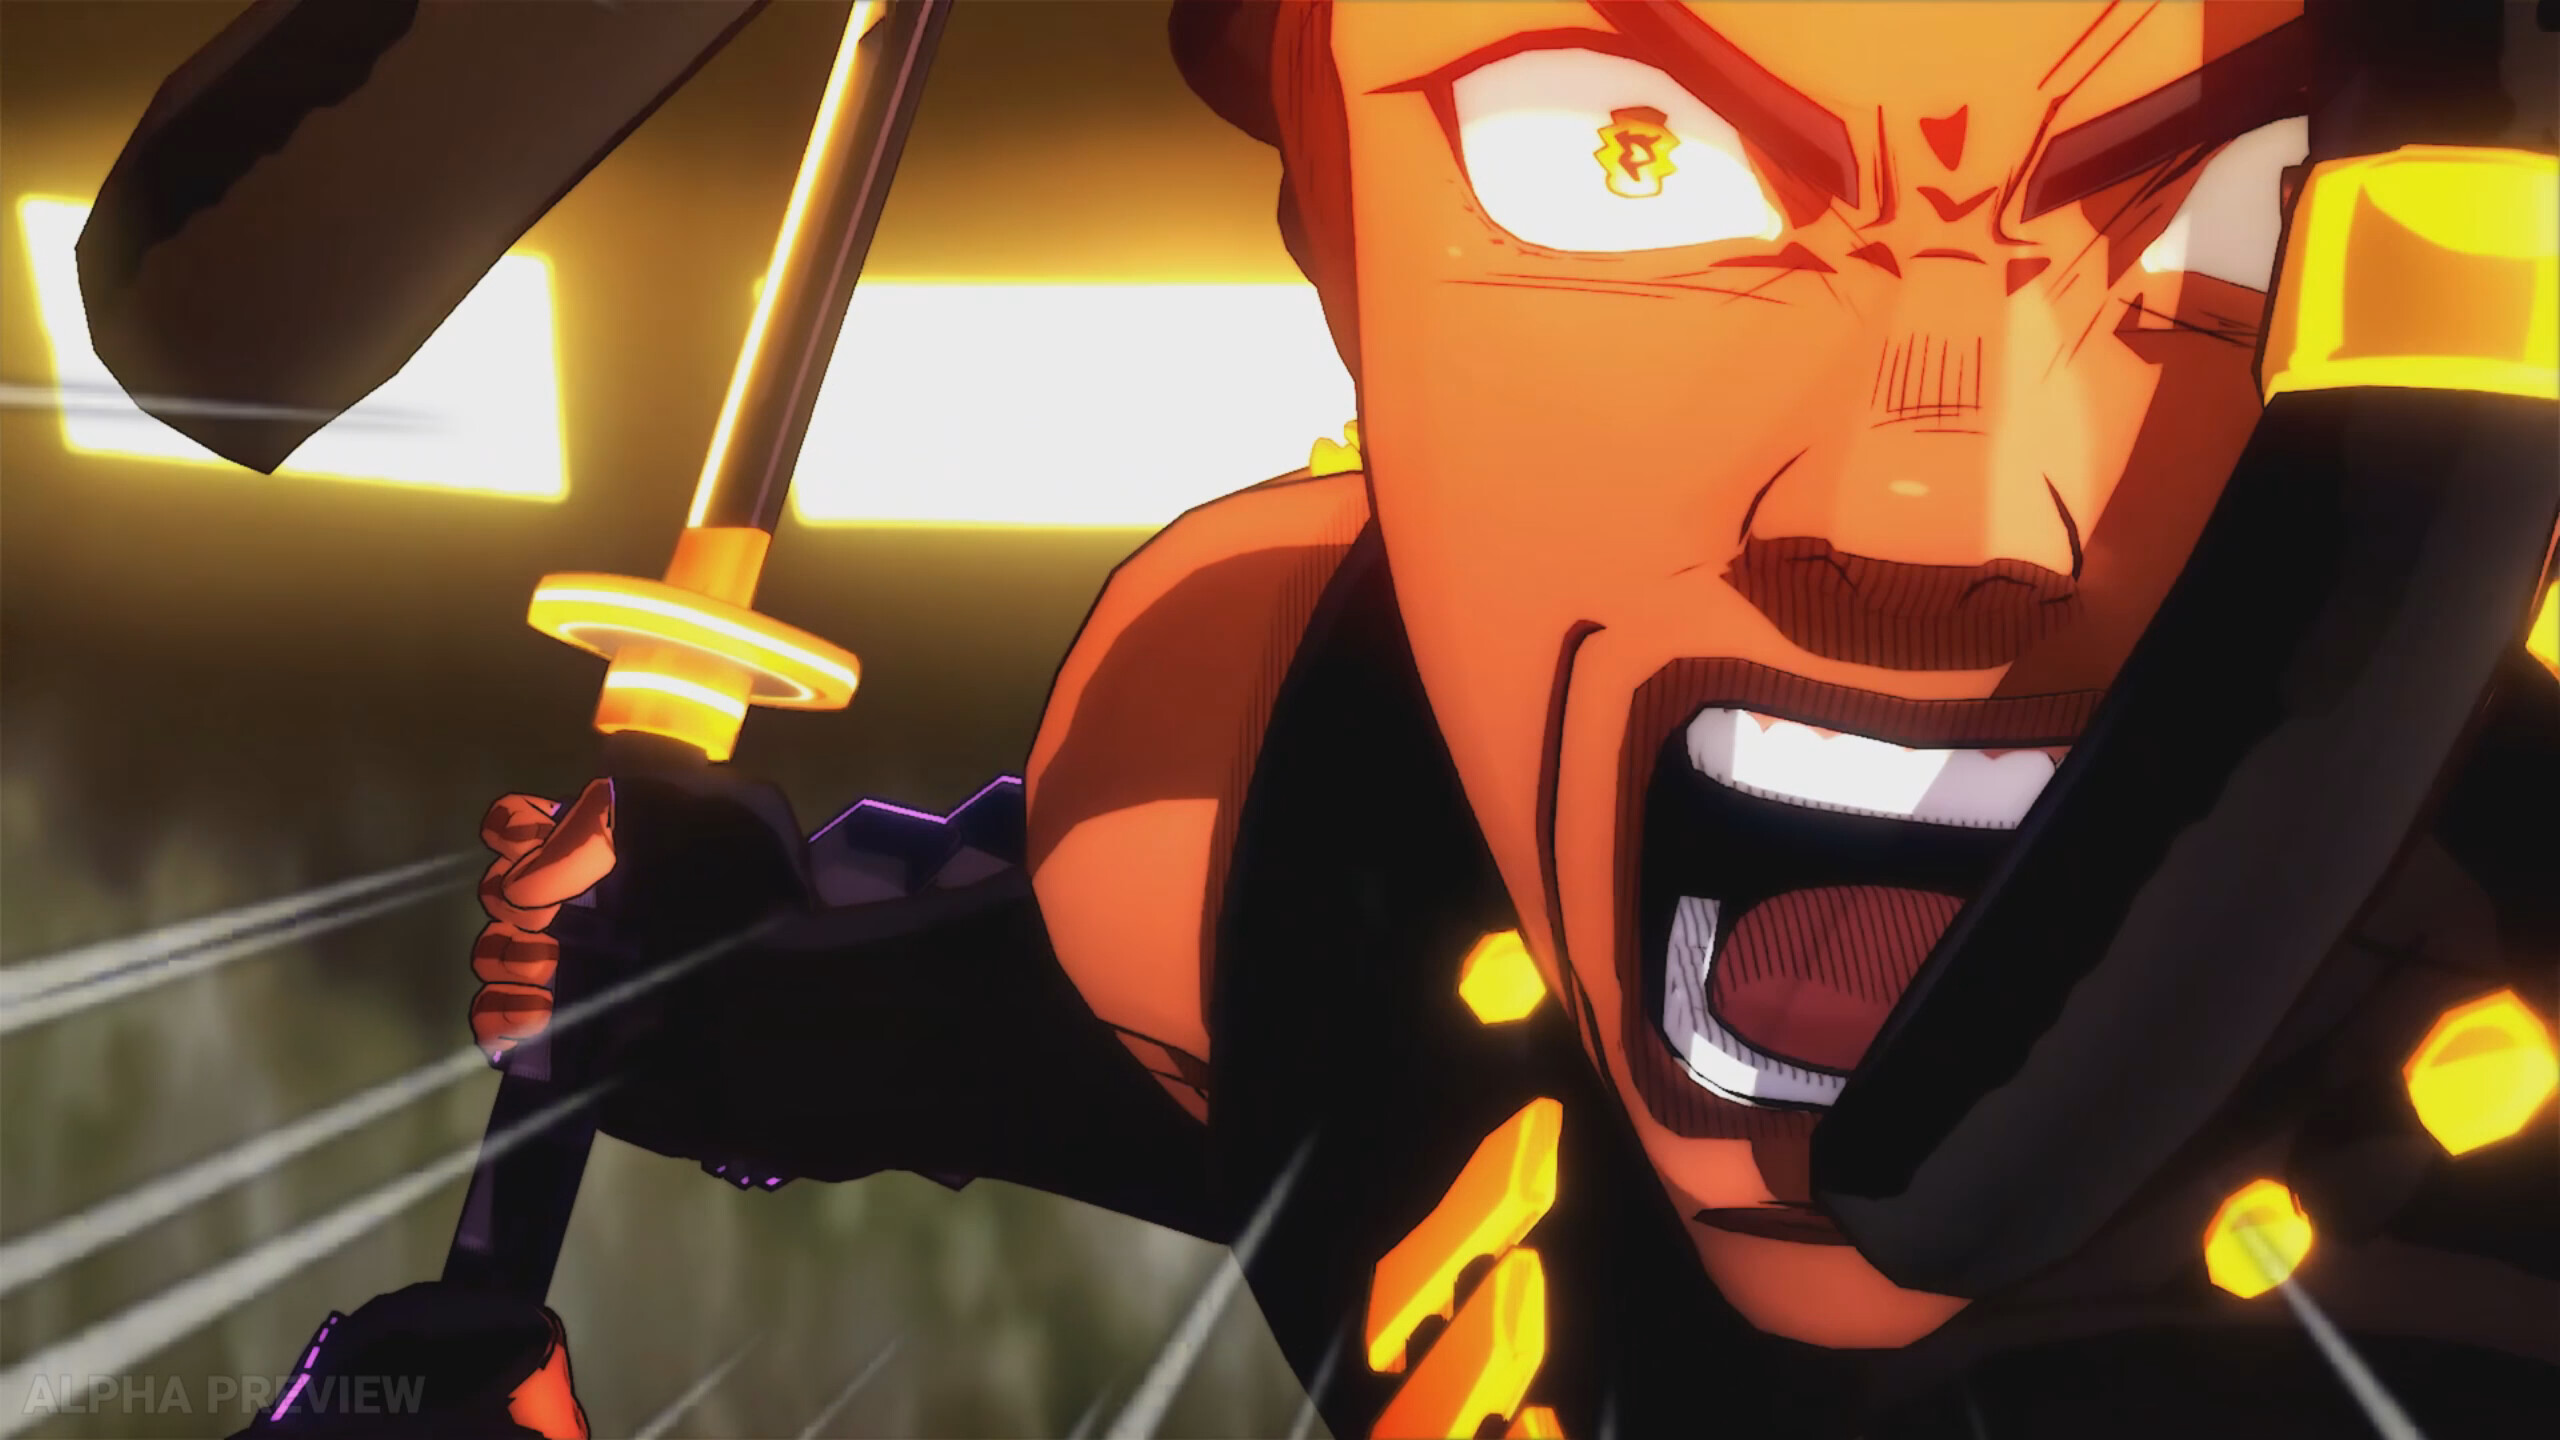 Screenshot of Yasuke screaming and running at the camera with a sword drawn